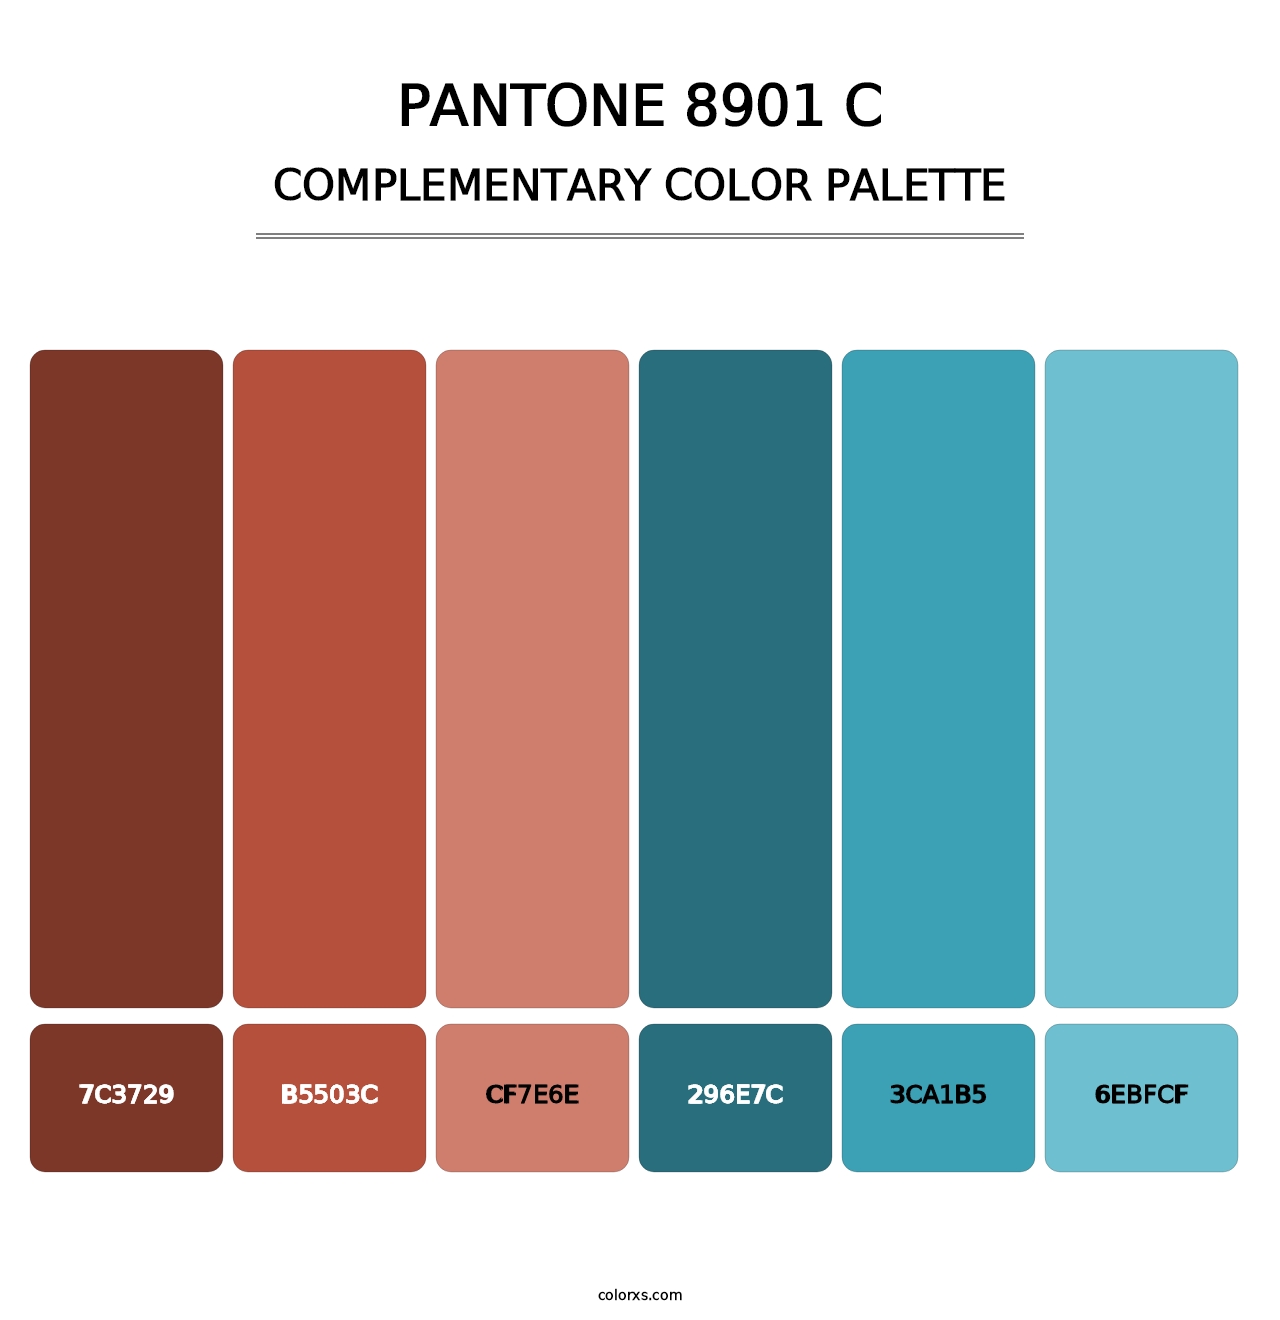 PANTONE 8901 C - Complementary Color Palette